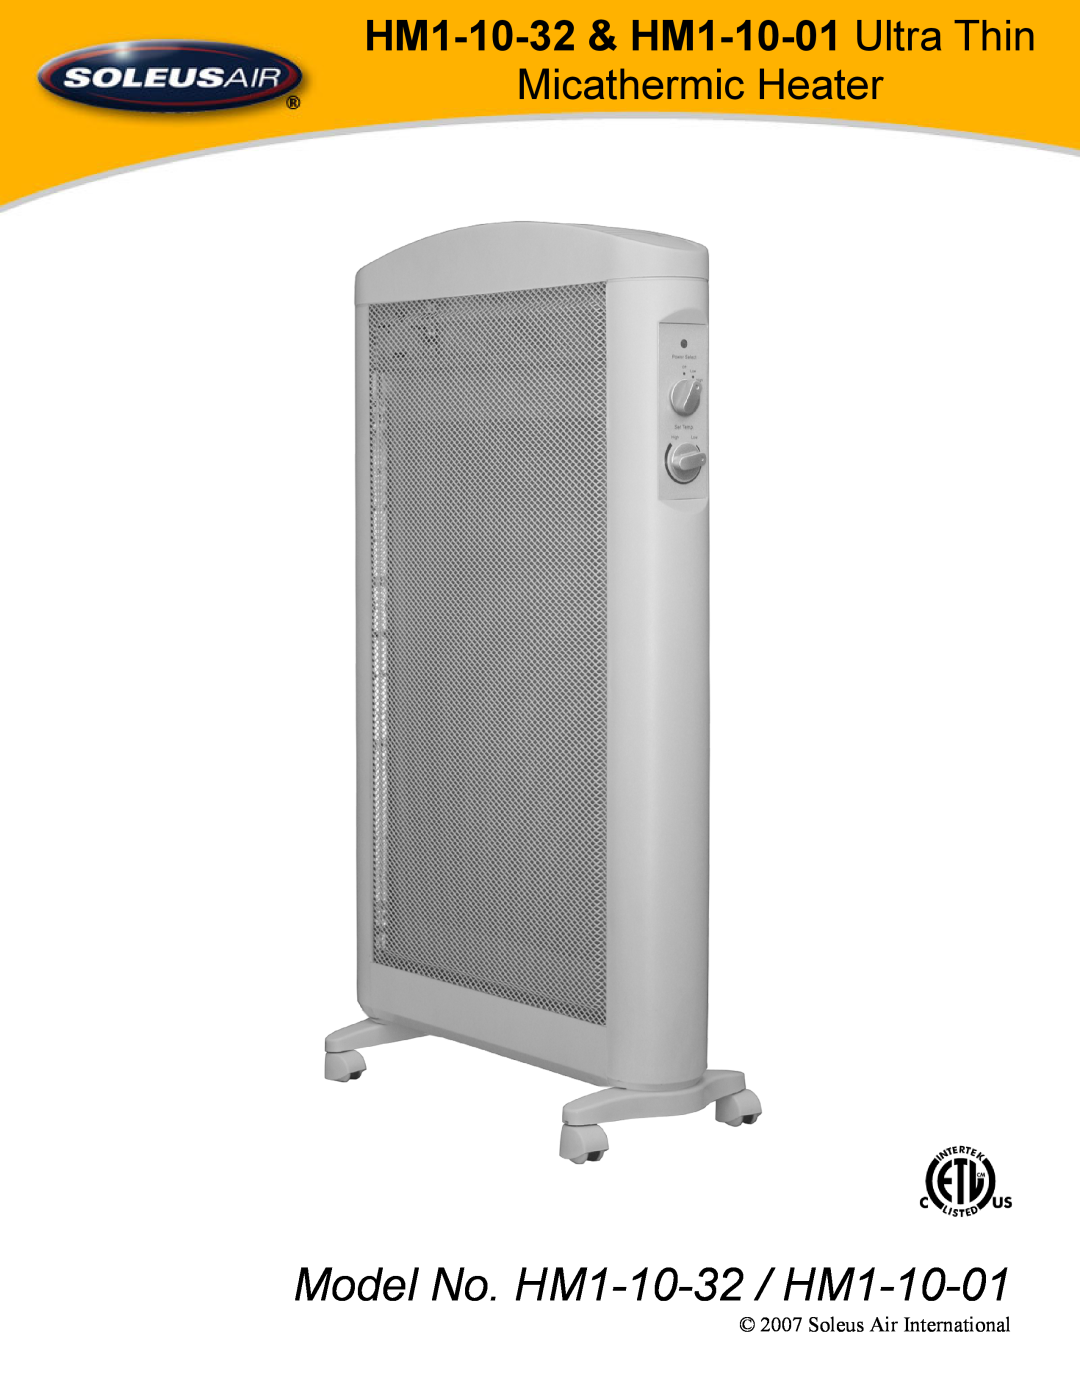 Soleus Air manual Model No. HM1-10-32, Ultra Thin Micathermic Heater, 309402 